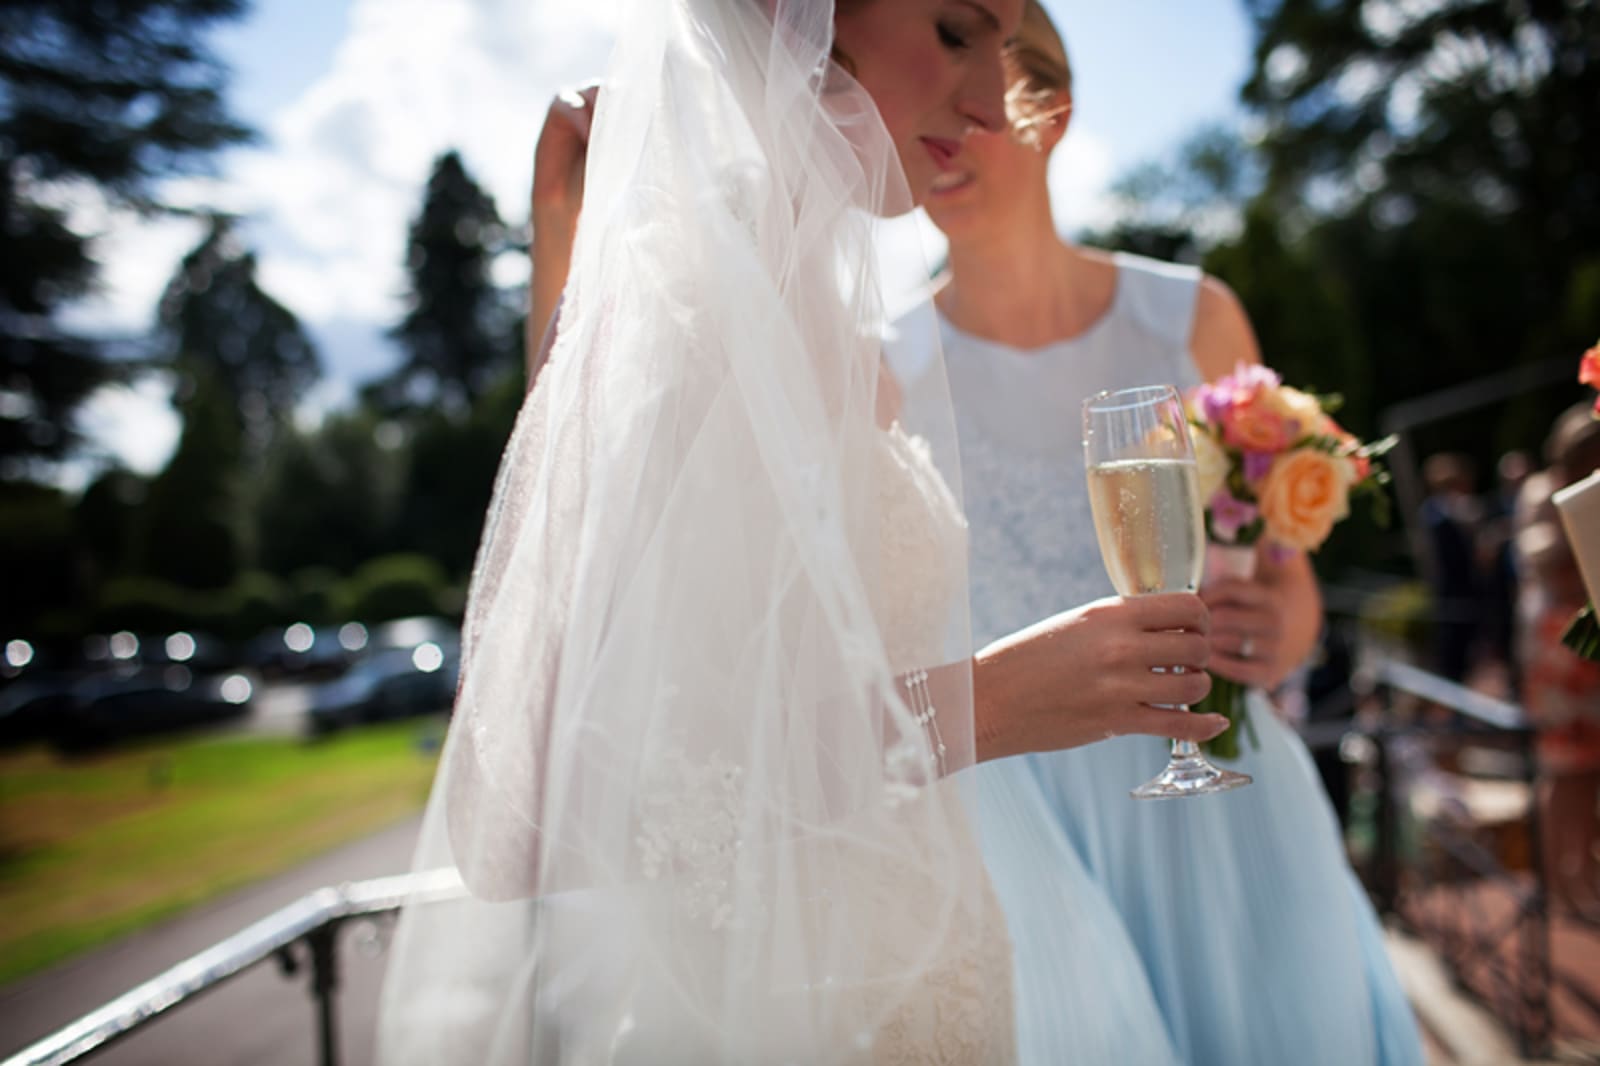 South East | Buckinghamshire | Maidenhead | Summer | Classic | Elegant | Blue | Pastels | Country House | Real Wedding | Guy Hearn Photography #Bridebook #RealWedding #WeddingIdeas Bridebook.co.uk 